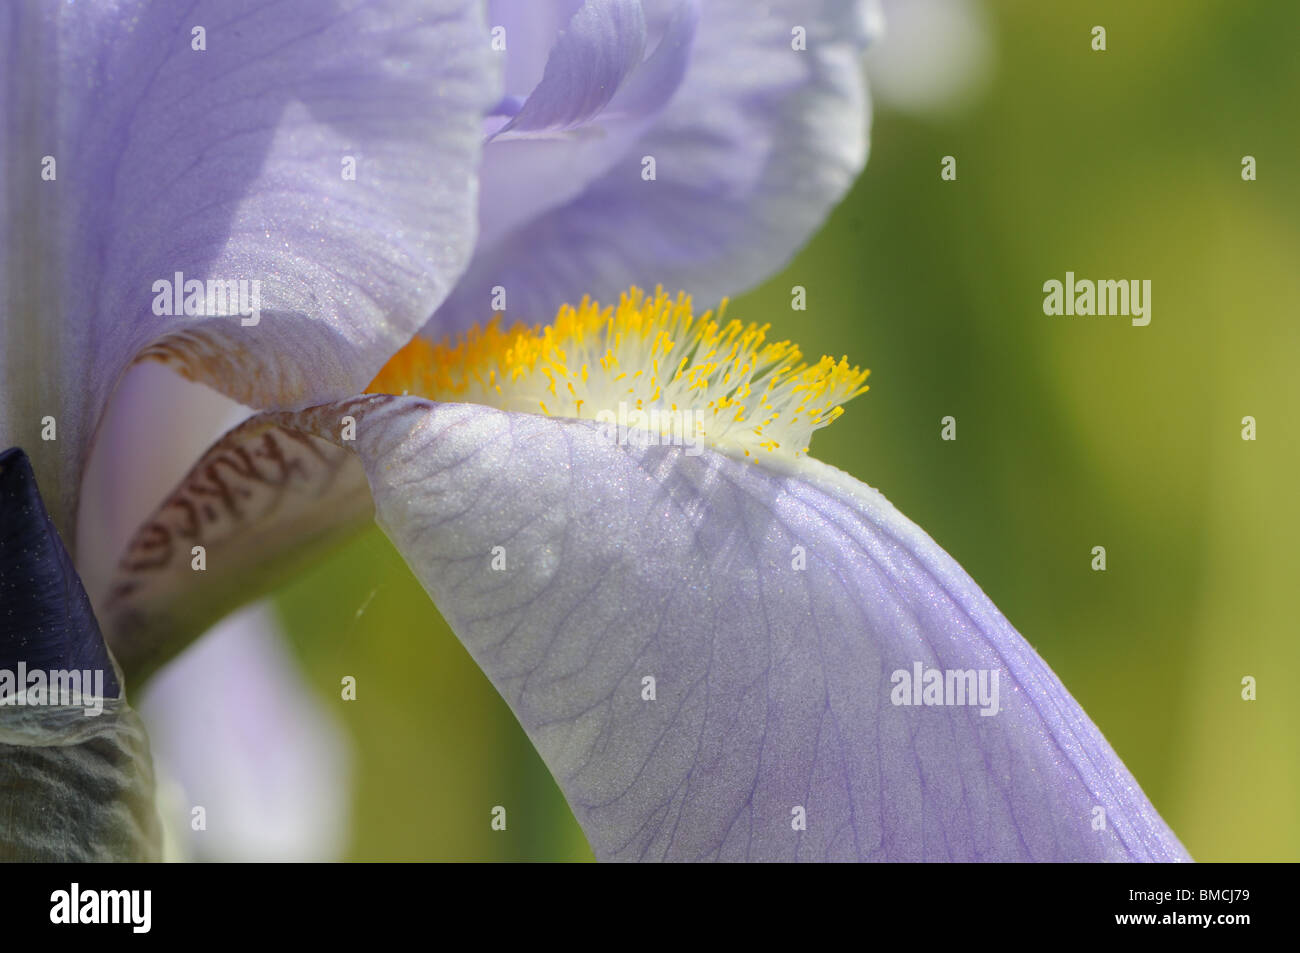 Falls on Iris petal (Iris pallida variegata) Stock Photo